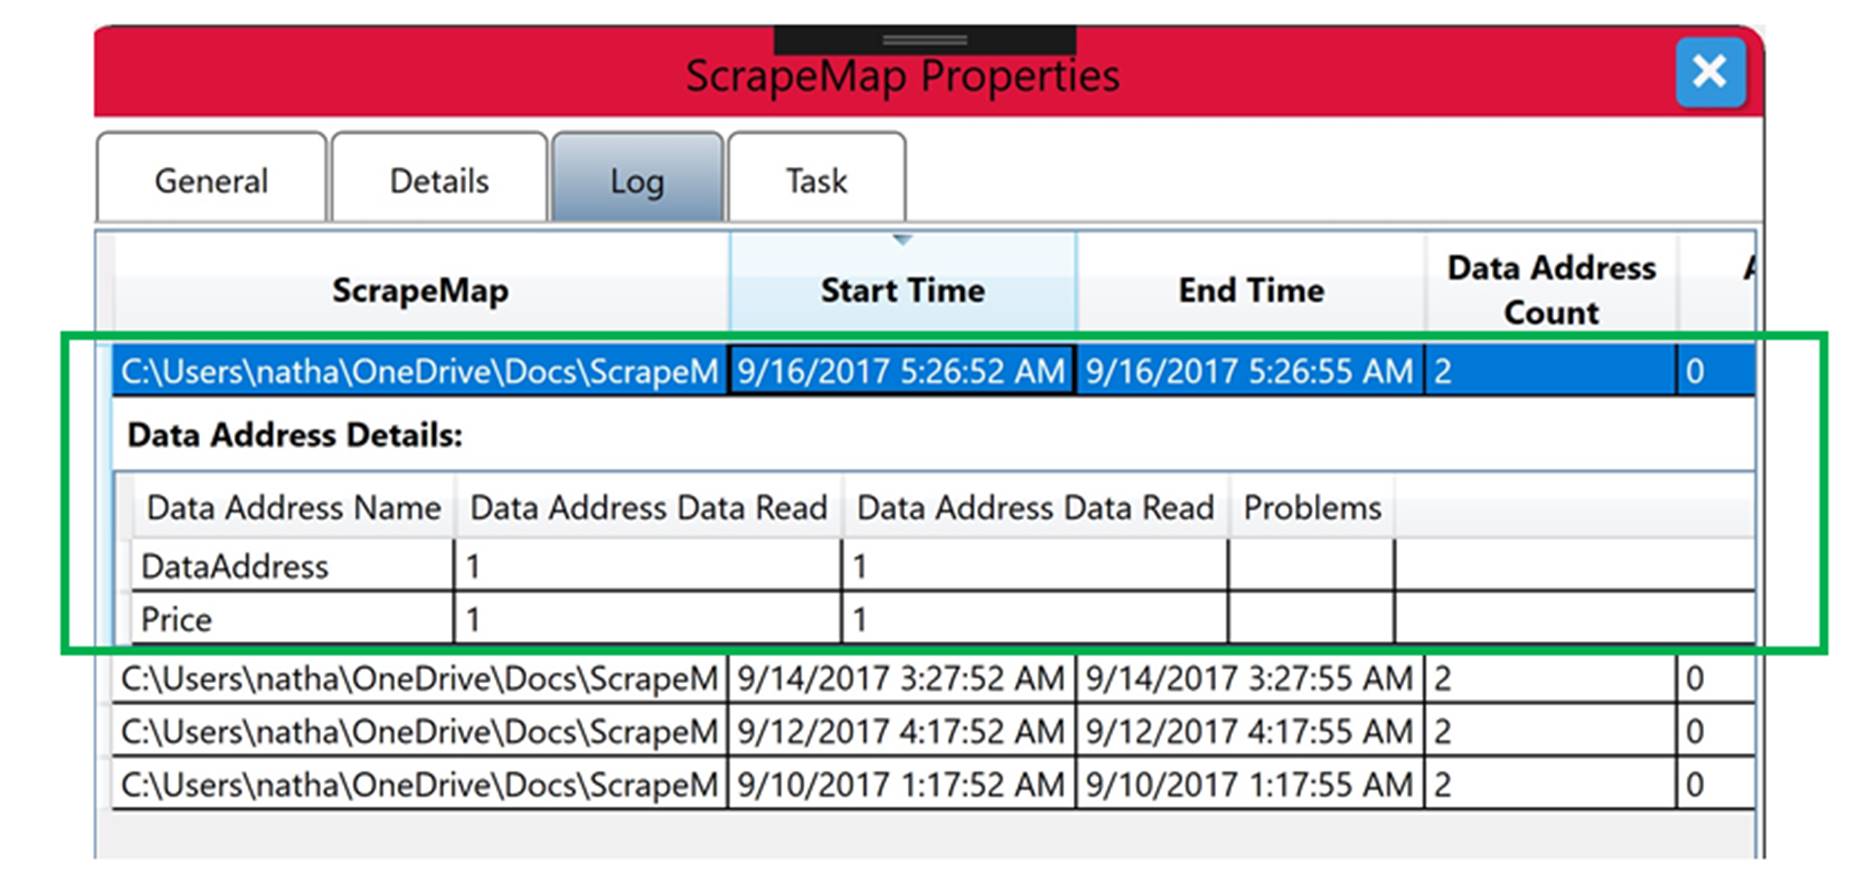 ScrapeMap Properties Dialog with the Log details displayed